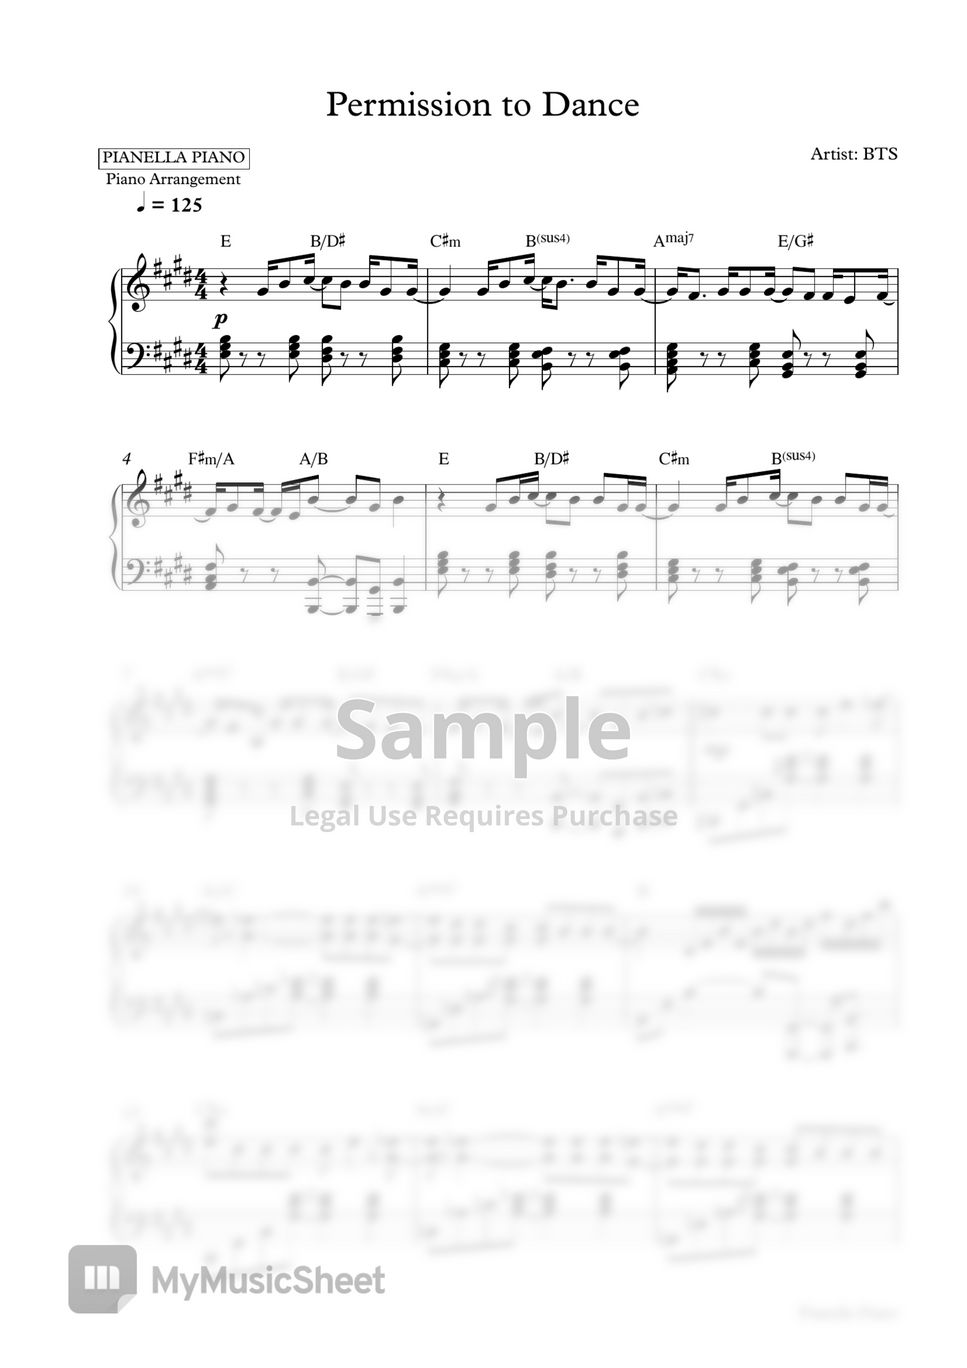 BTS - Permission to Dance (Piano Sheet) by Pianella Piano